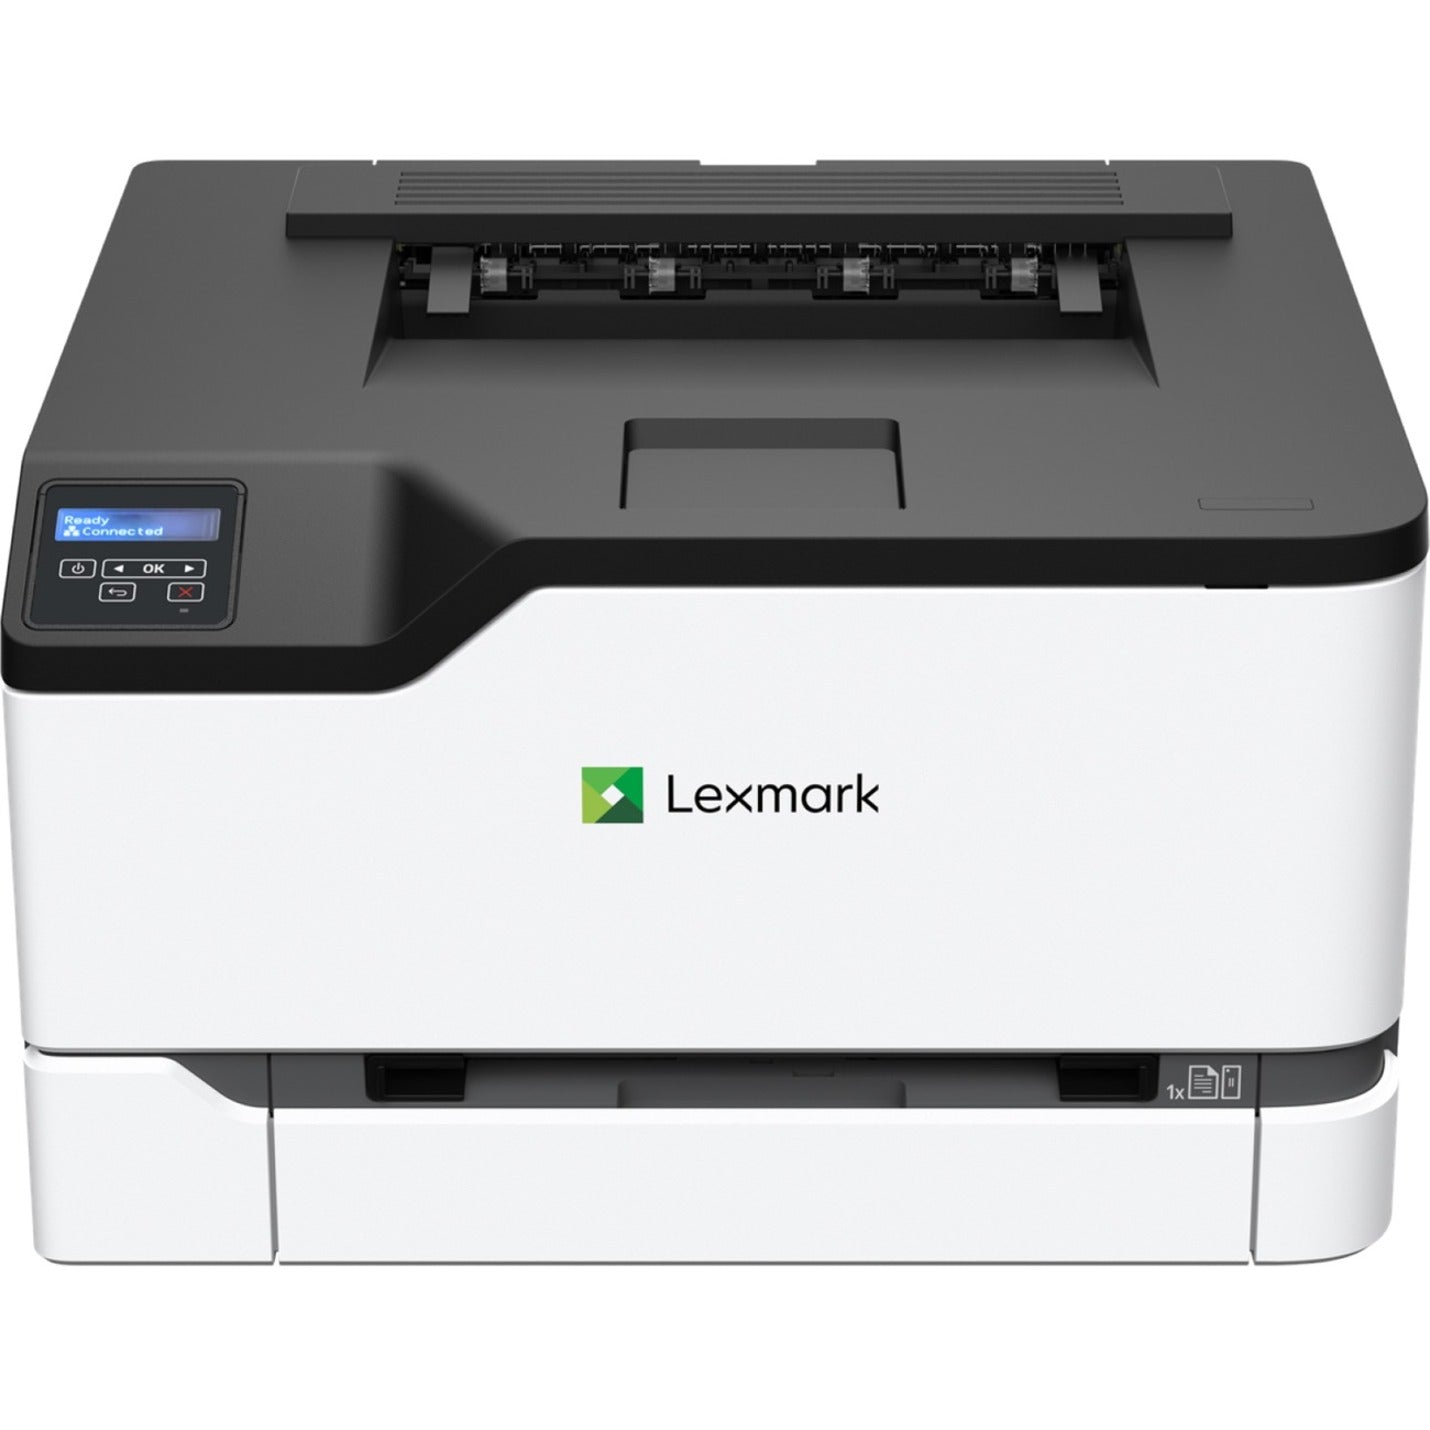 Lexmark 40N9010 C3326DW Laser Printer, Color, Wireless LAN, Duplex Printing